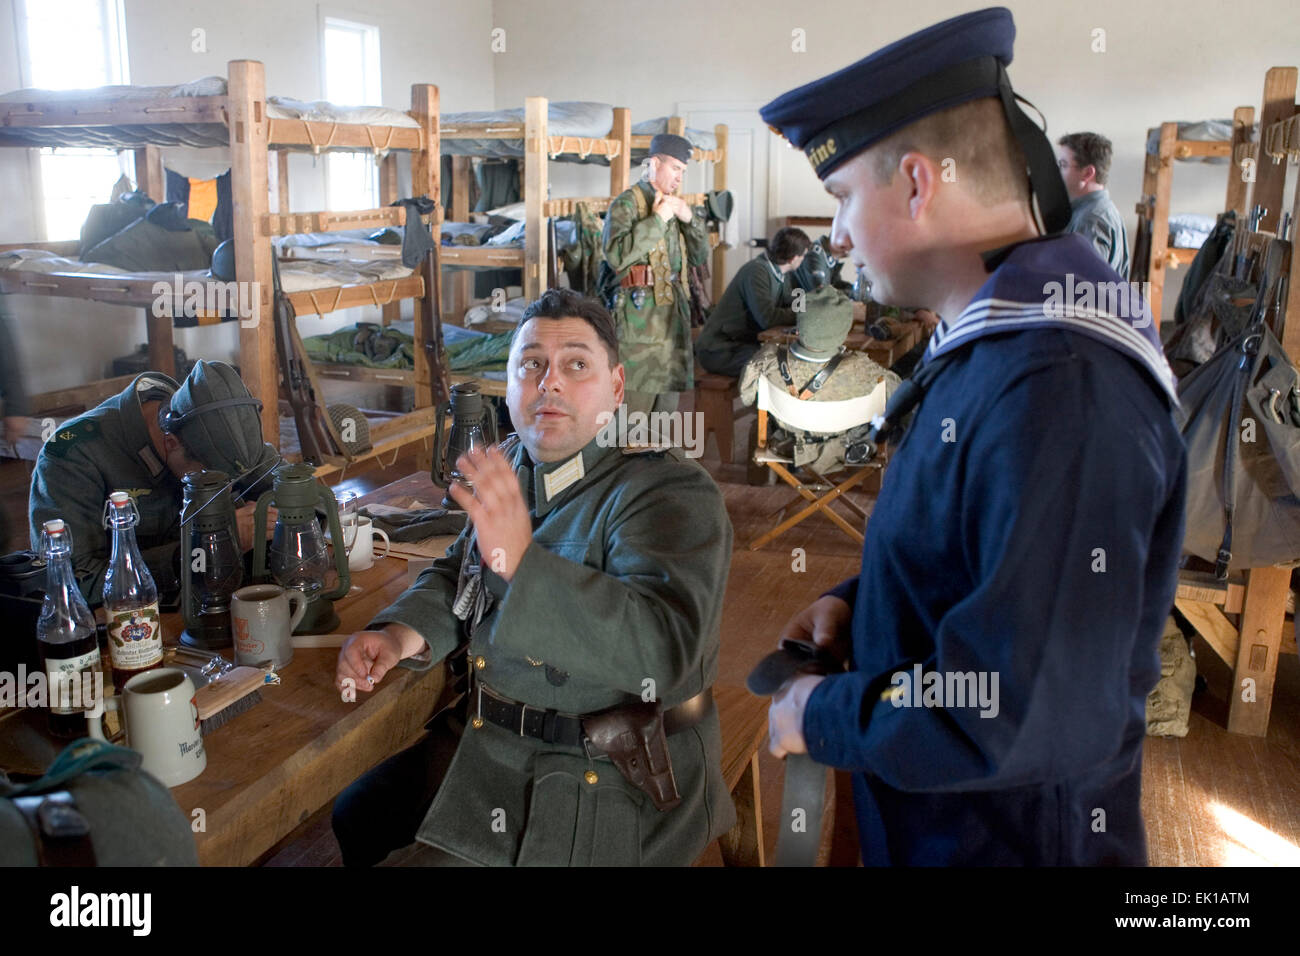 World War II reenactors wearing german uniforms chat inside a barrack at Fort Washita, Oklahoma. Stock Photo